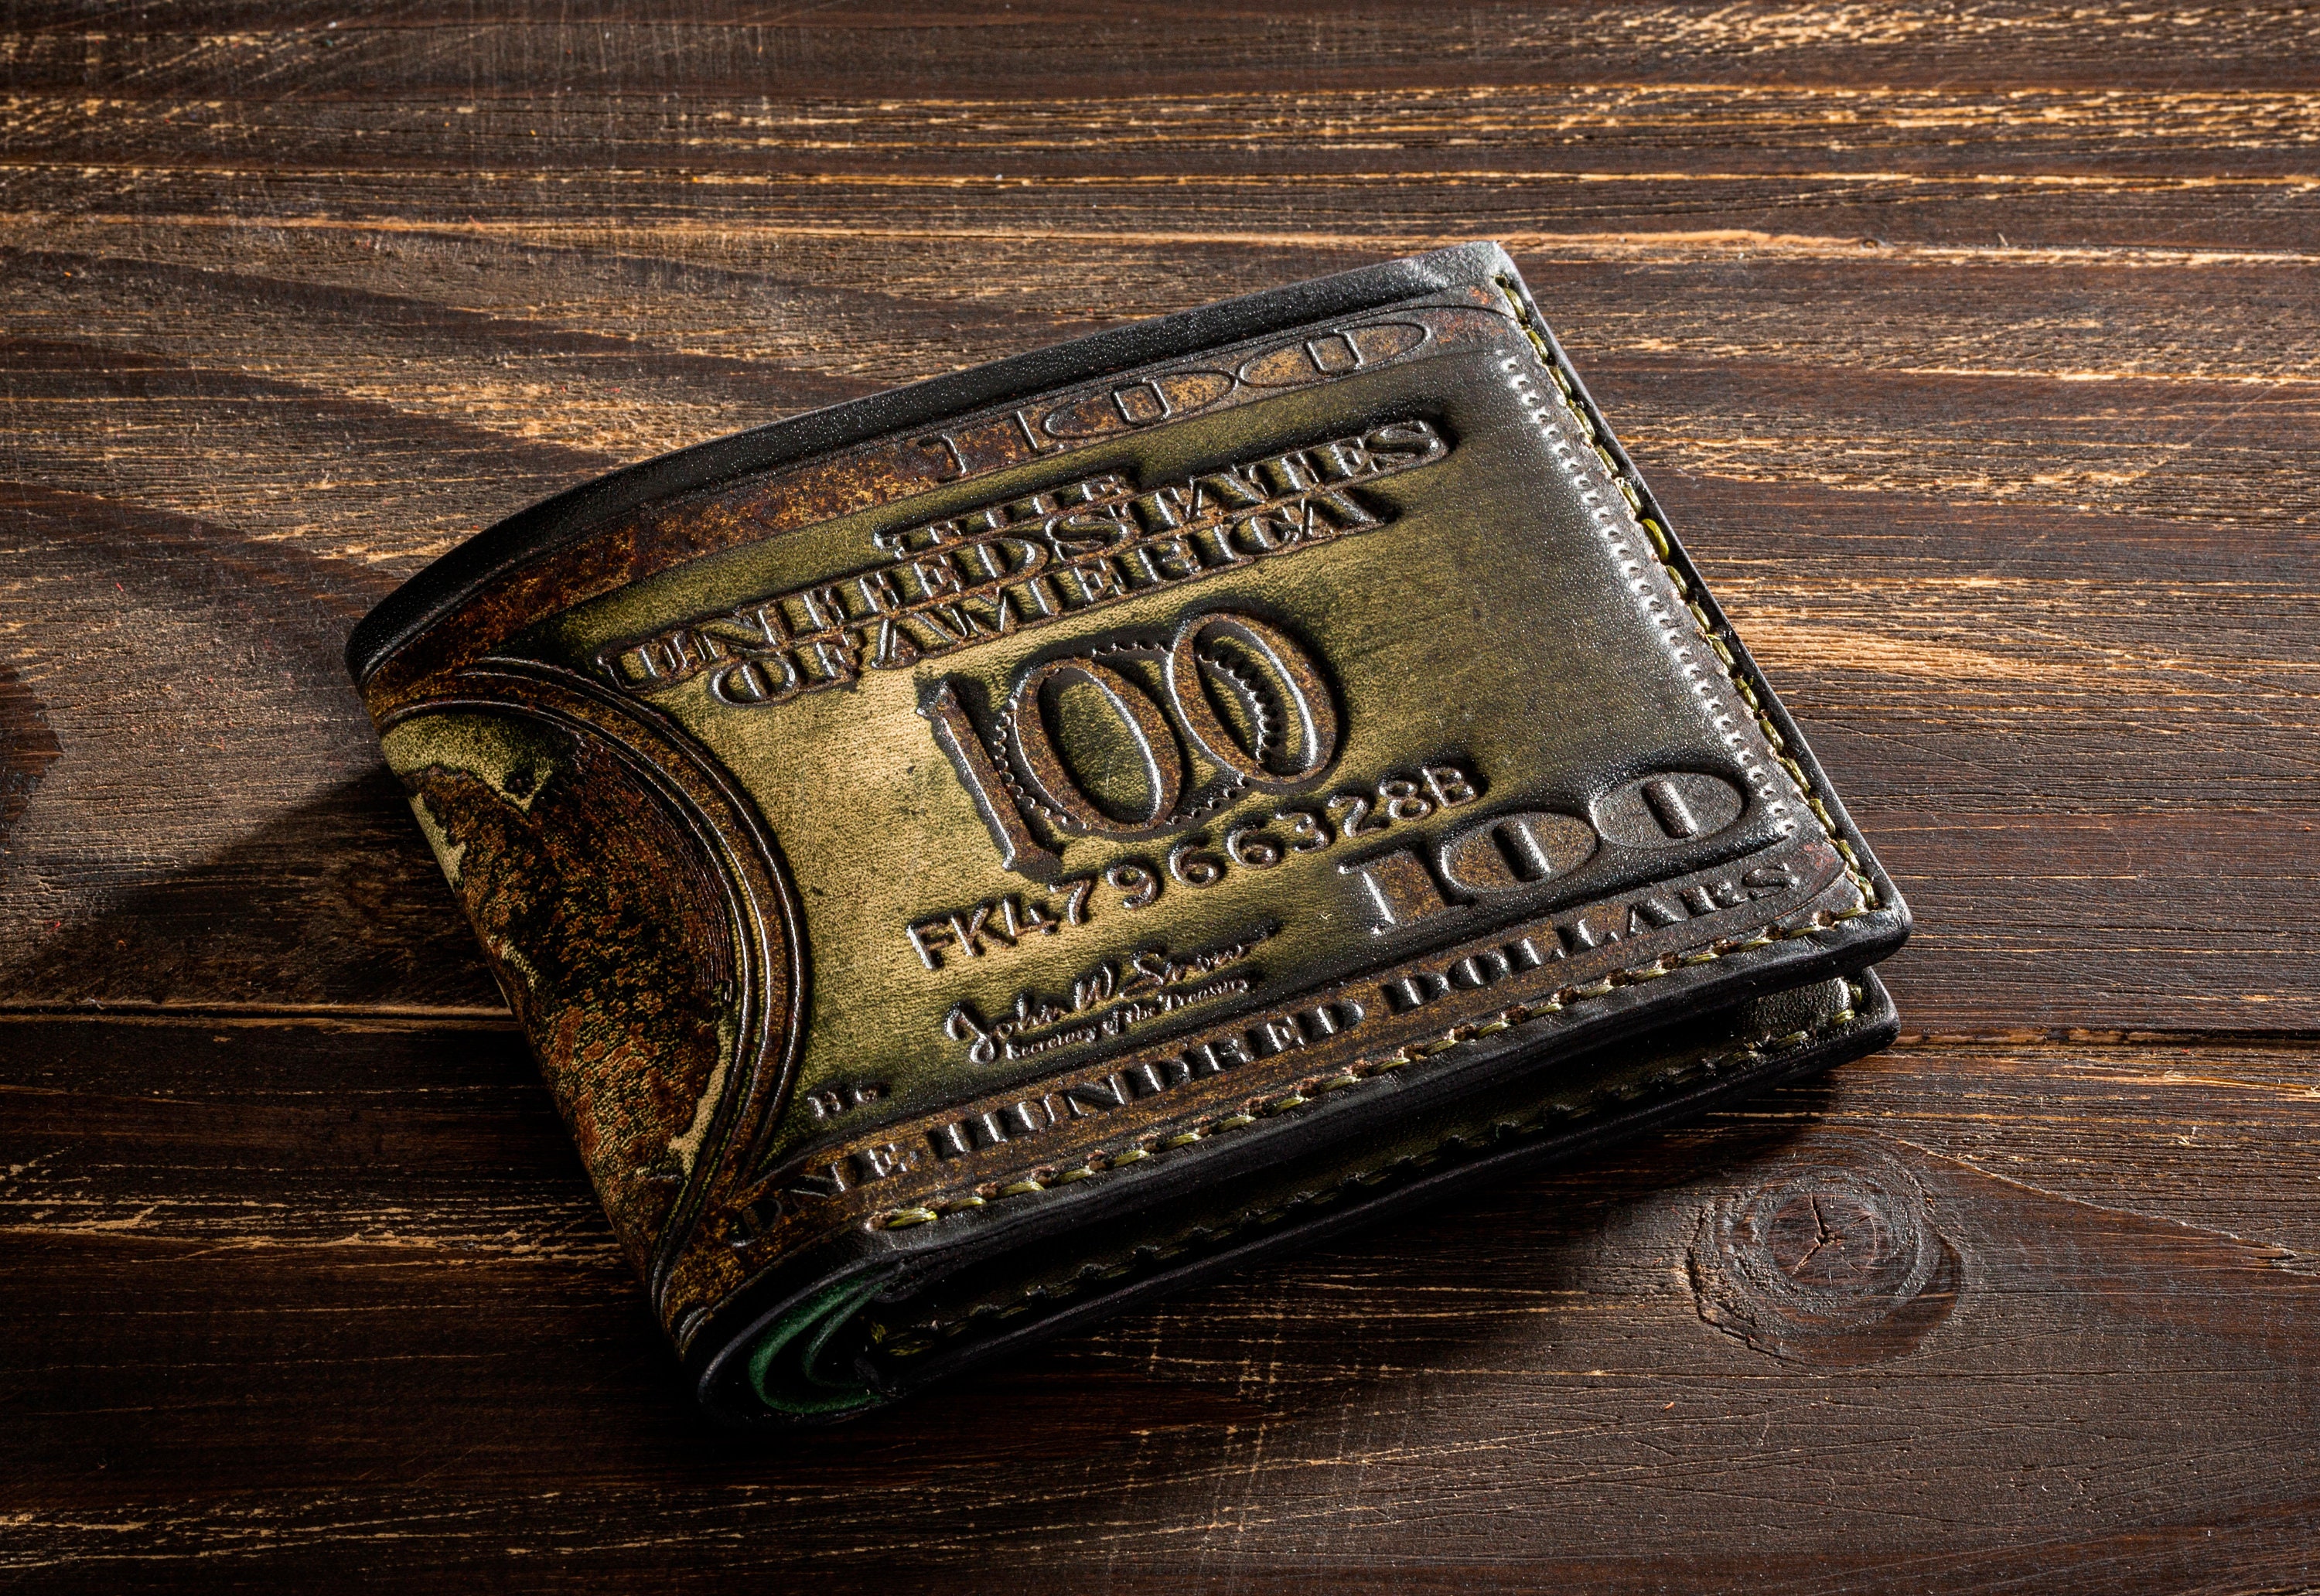 Men's US 100 Dollar Bill Leather Bifold Card Photo Holder Wallet